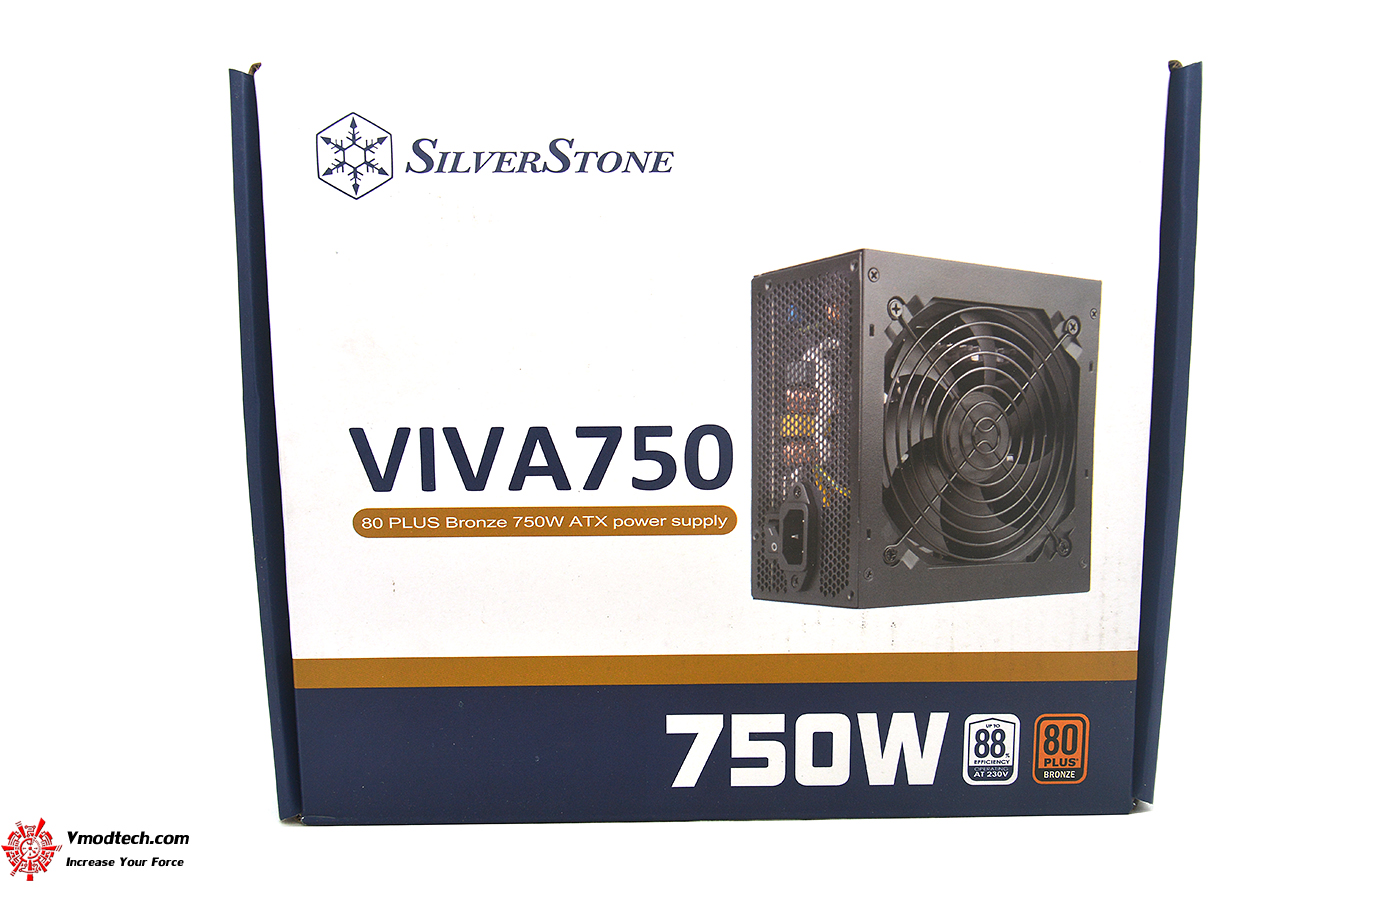 dsc 4439 SilverStone VIVA 750 Bronze Review